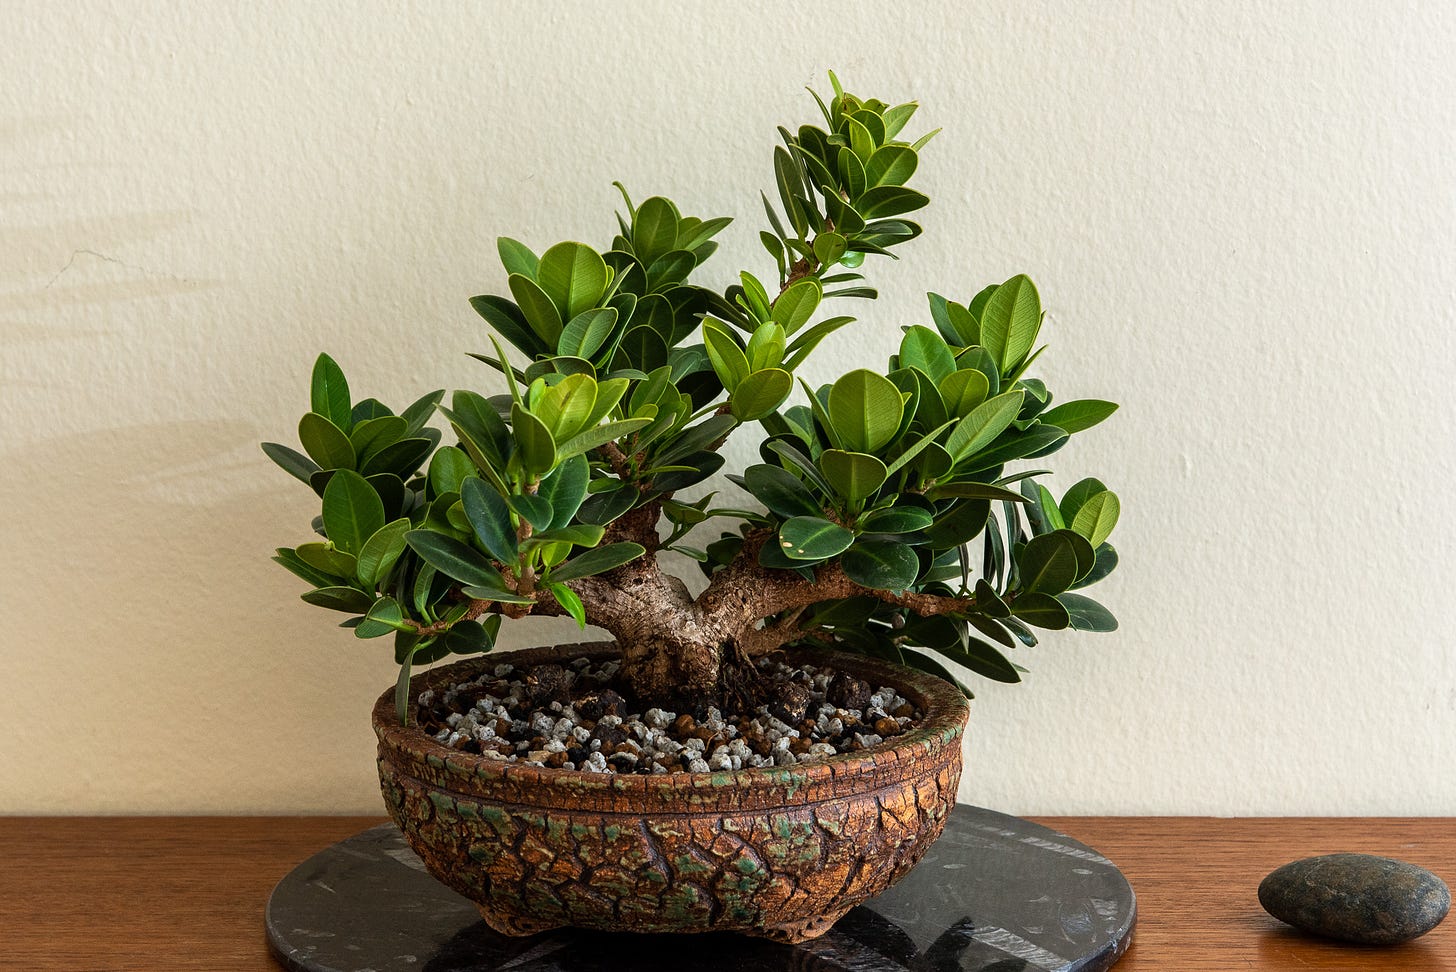 ID: Green island ficus planted in a crackled brown circular bonsai pot